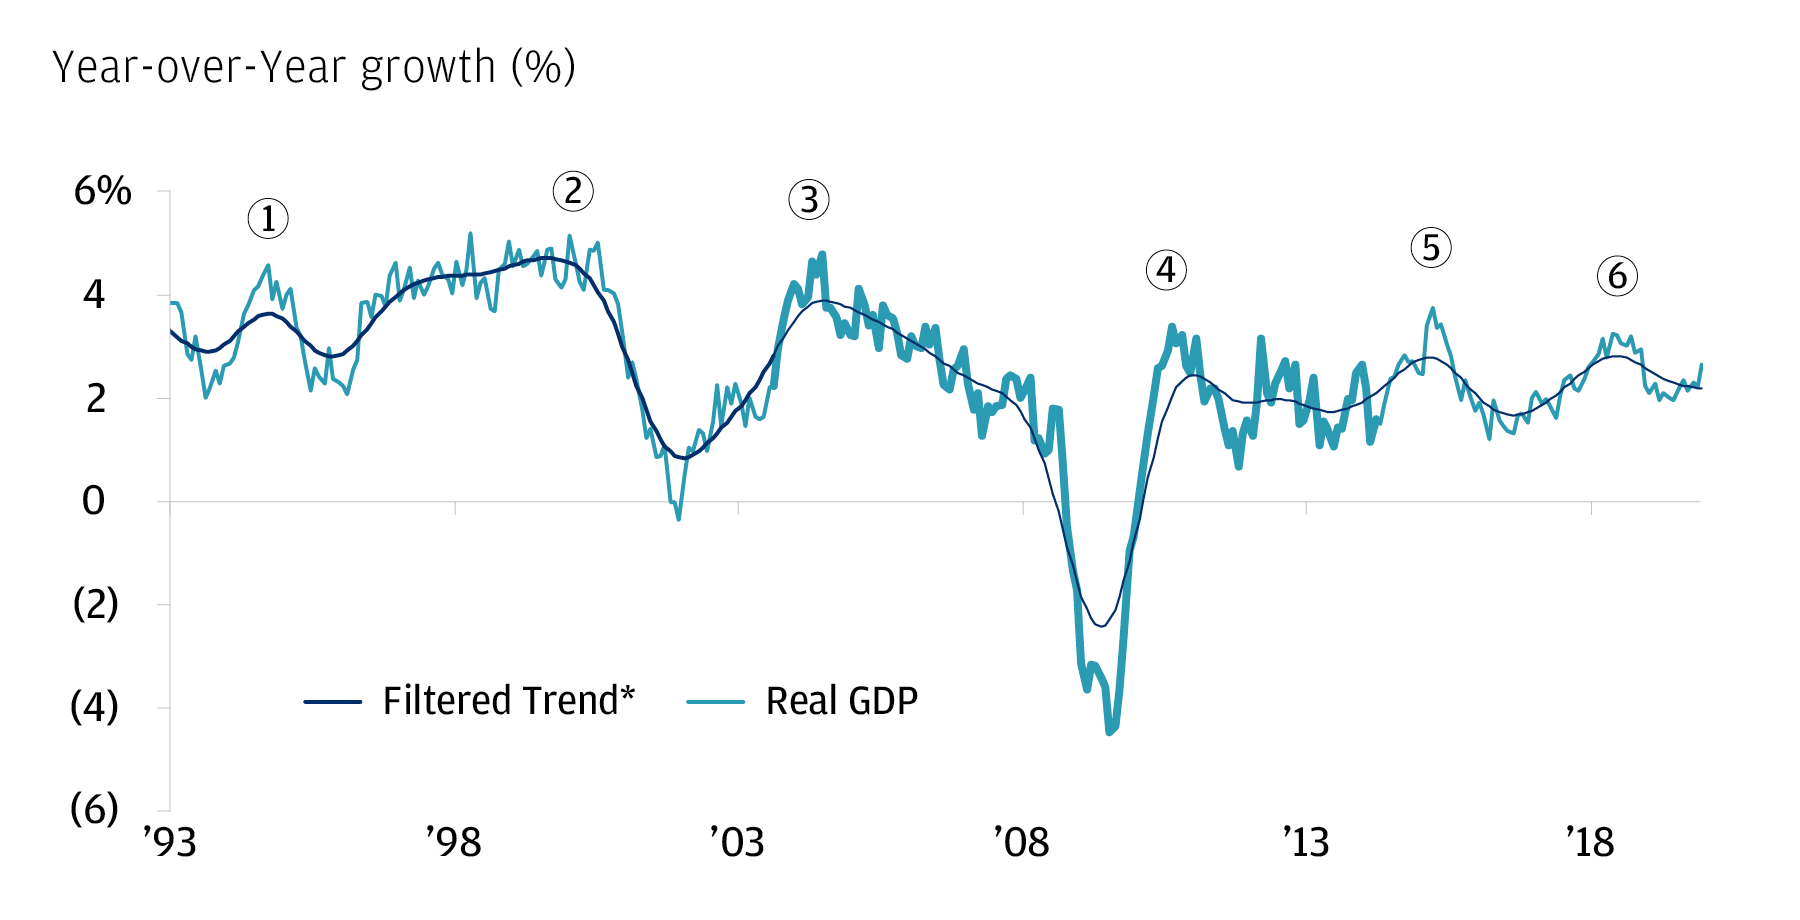 Growth slowdowns since the 1990s